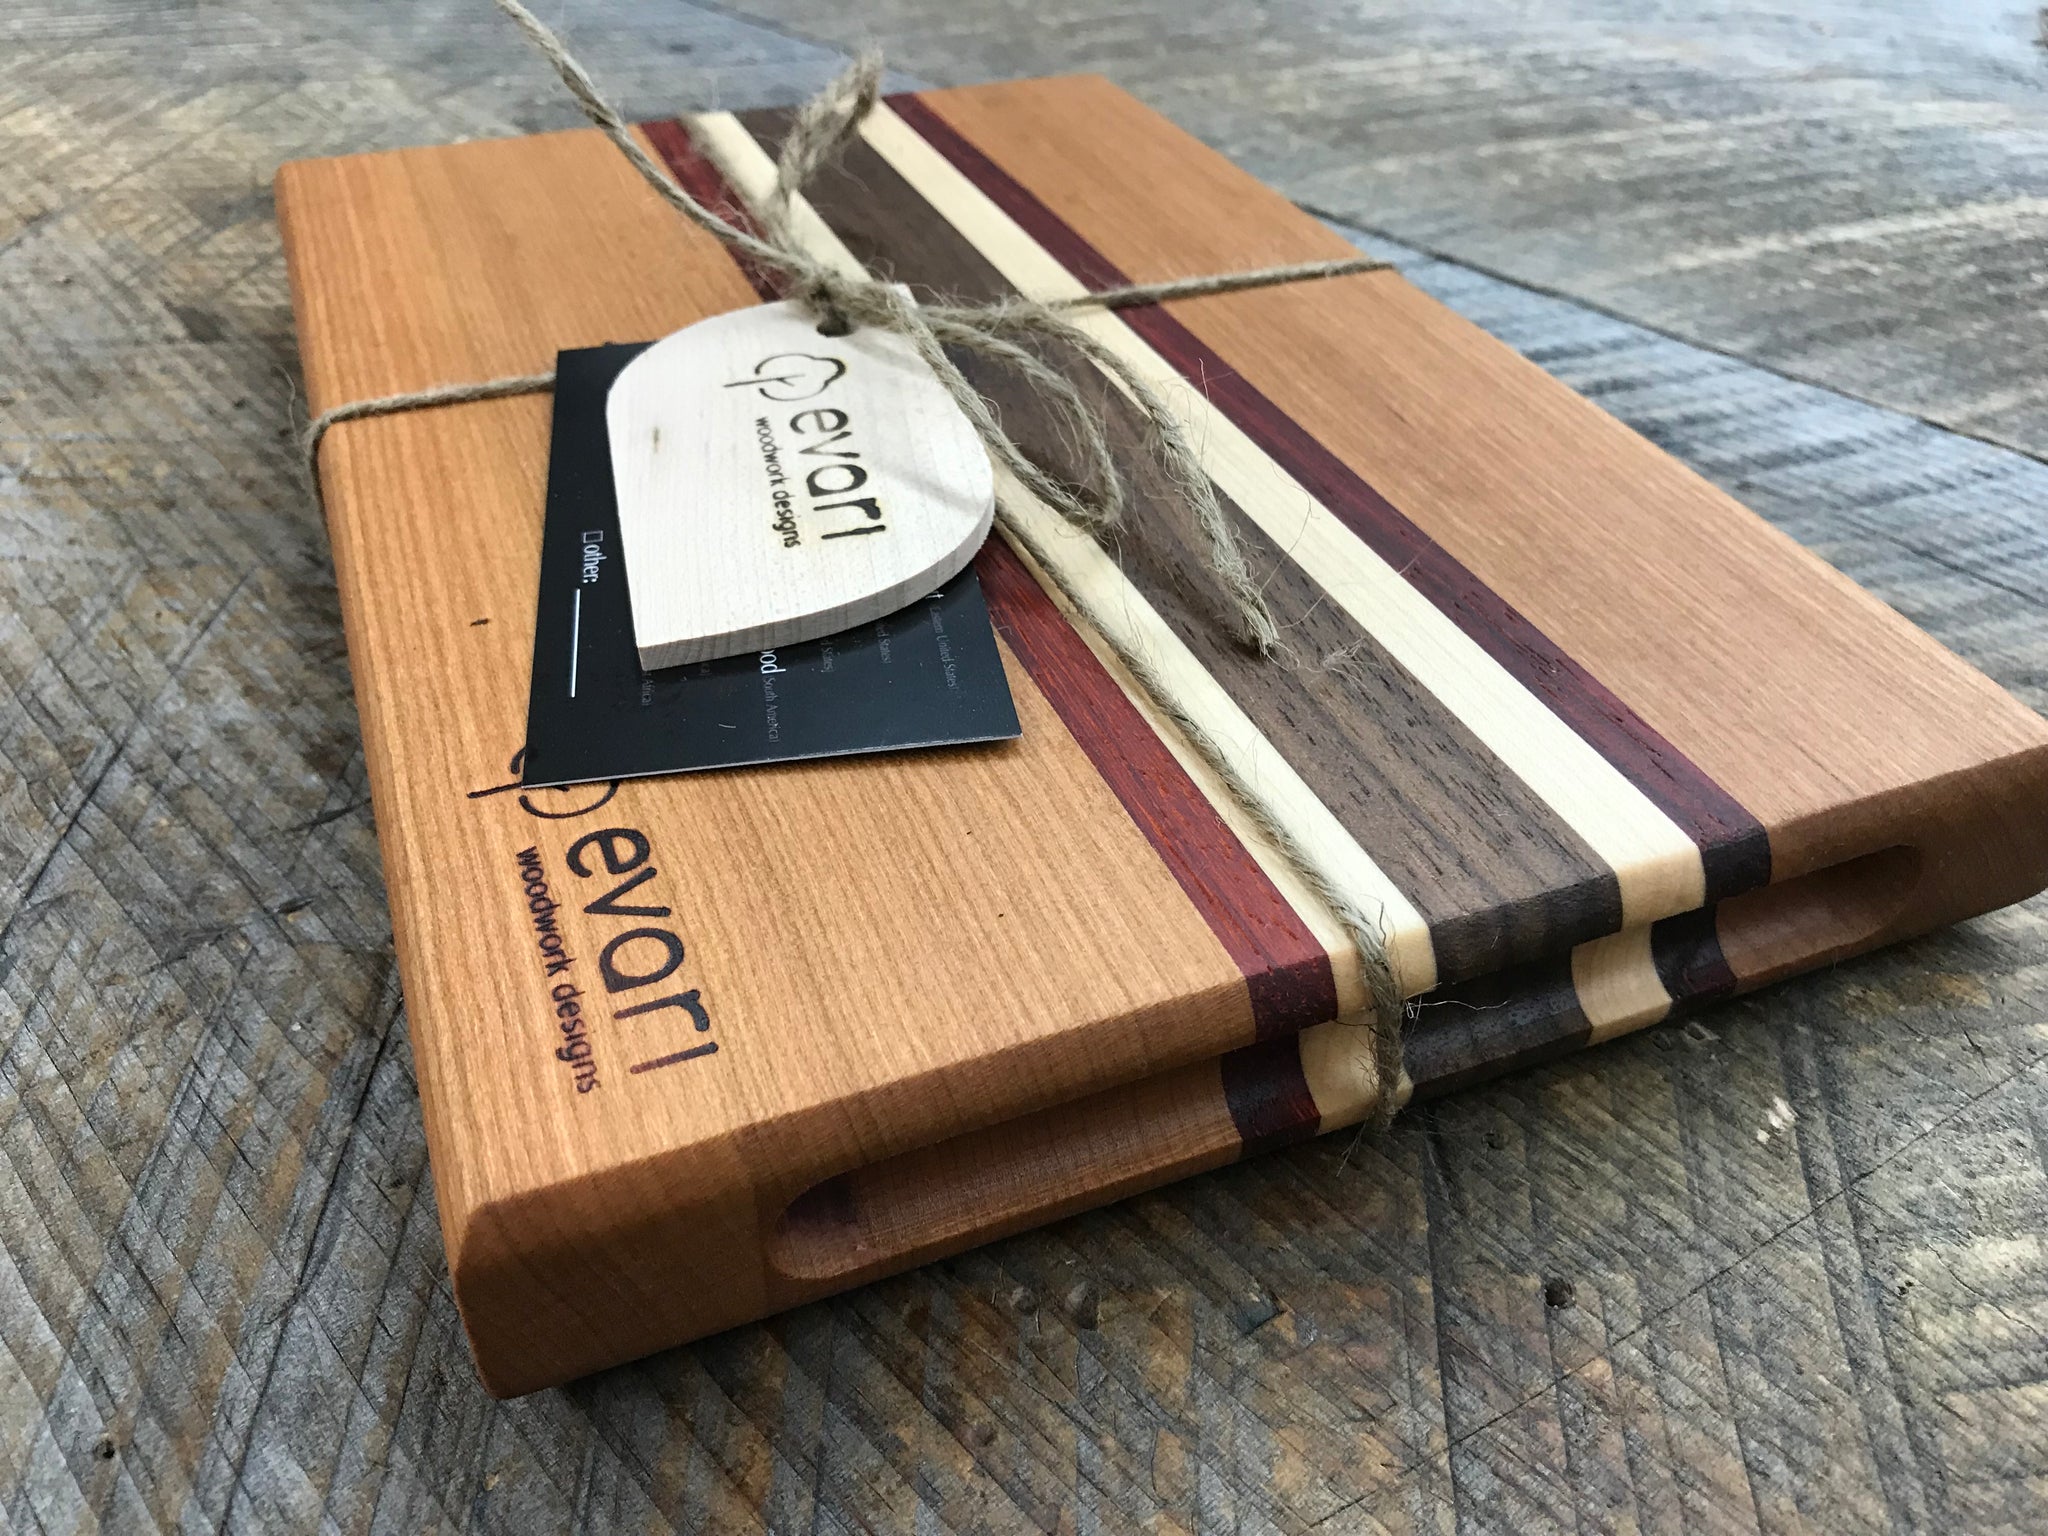 RAKAU Small Wood Cutting Board